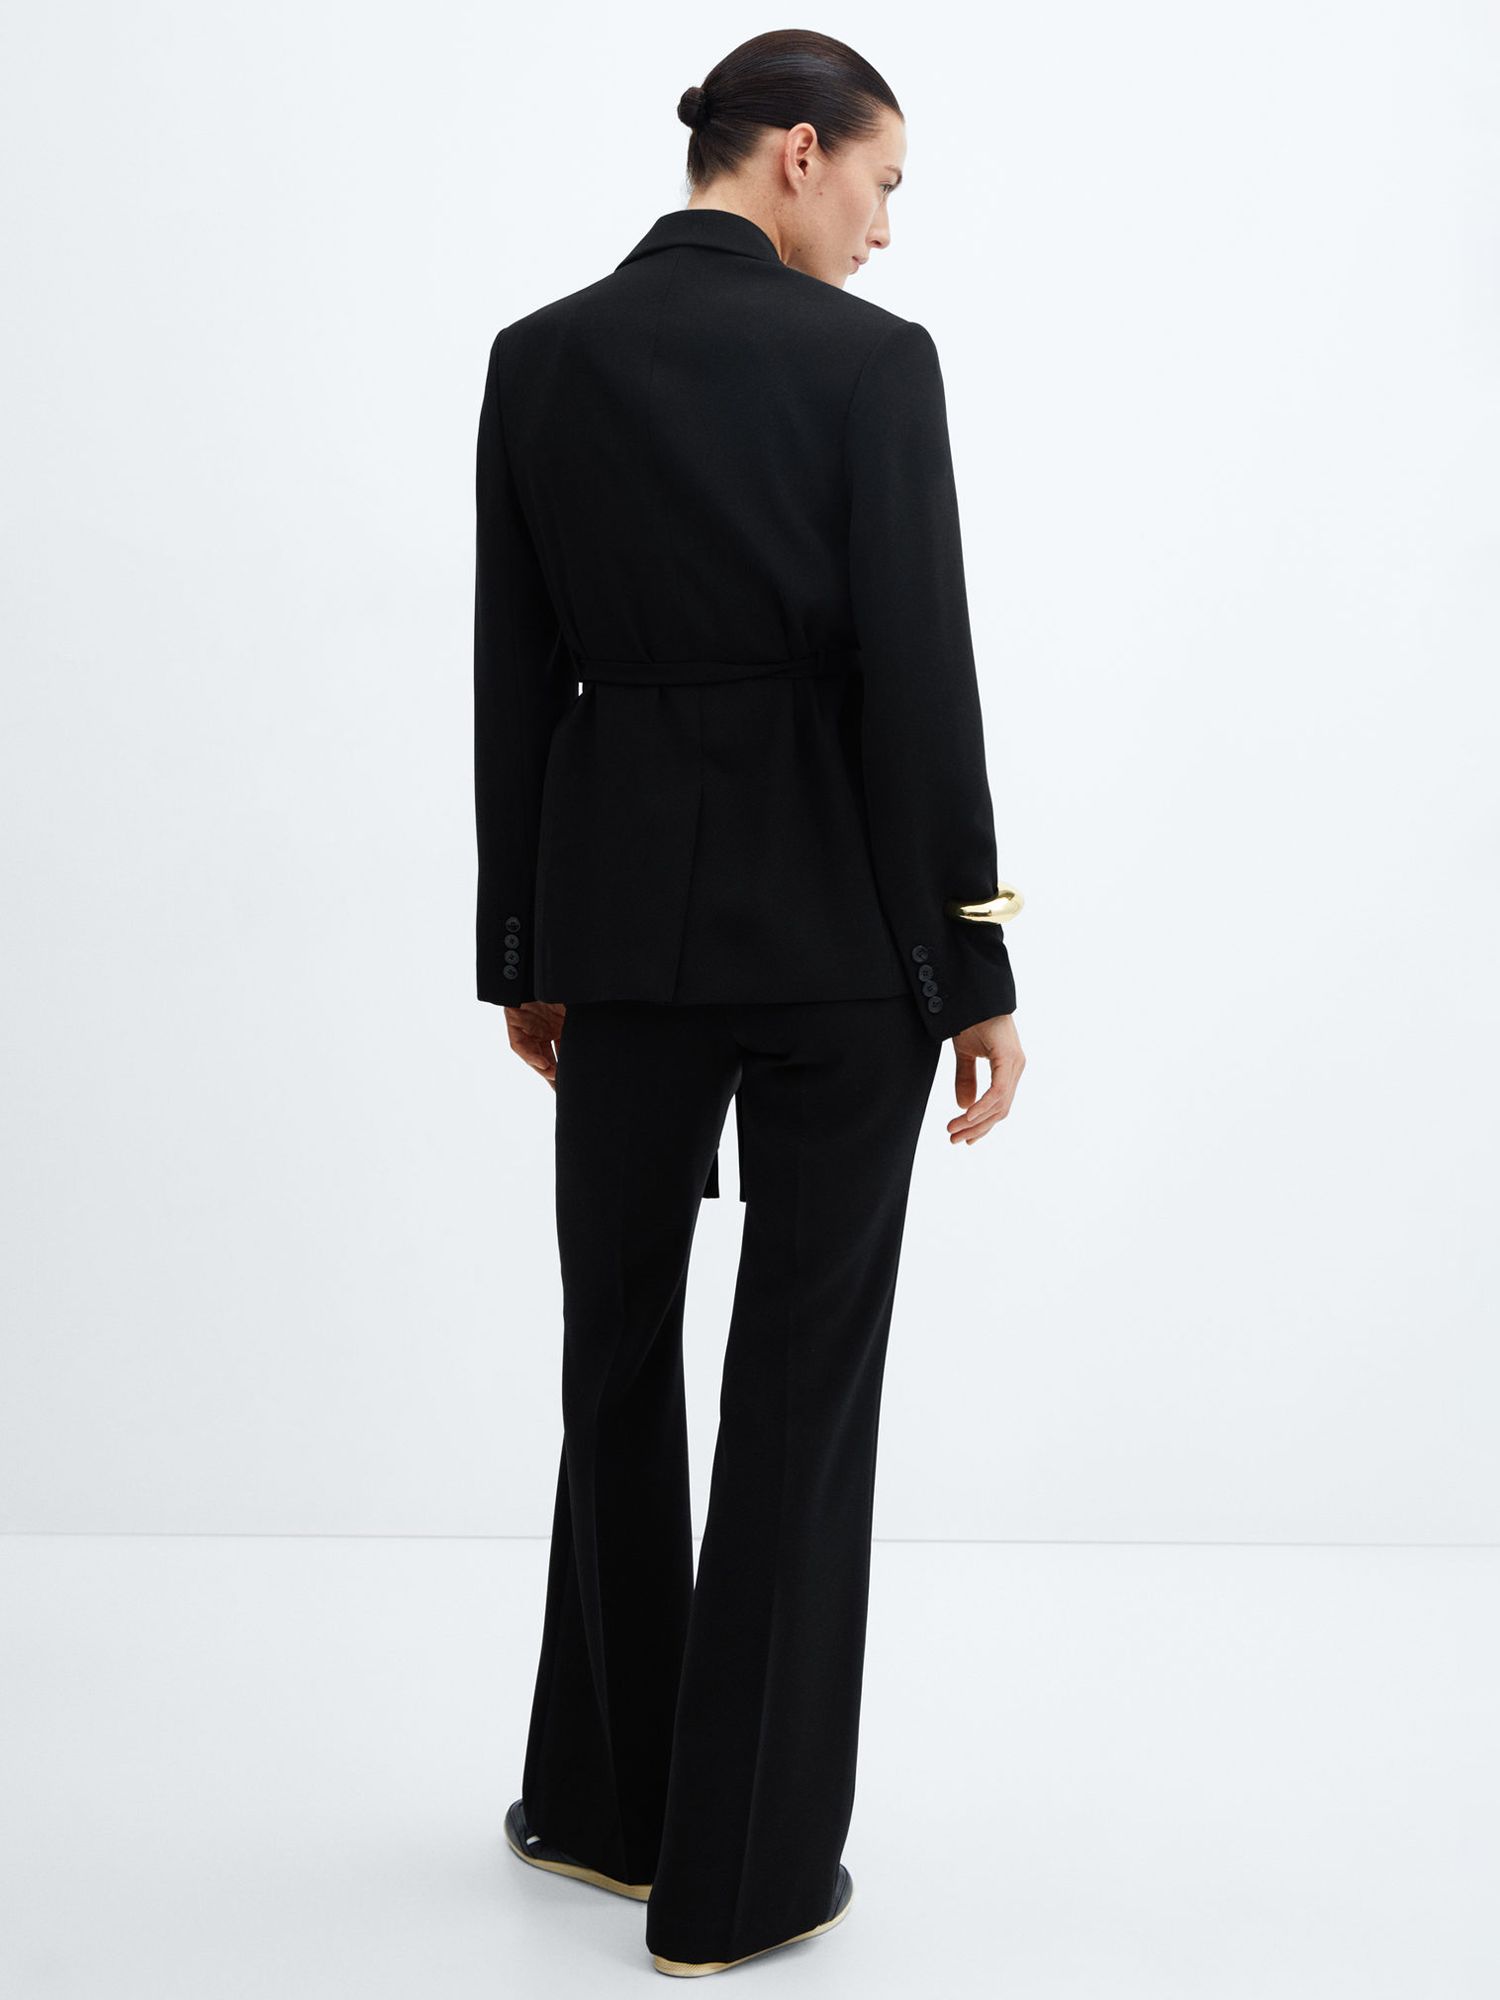 Buy Mango Tortuga Suit Blazer, Black Online at johnlewis.com